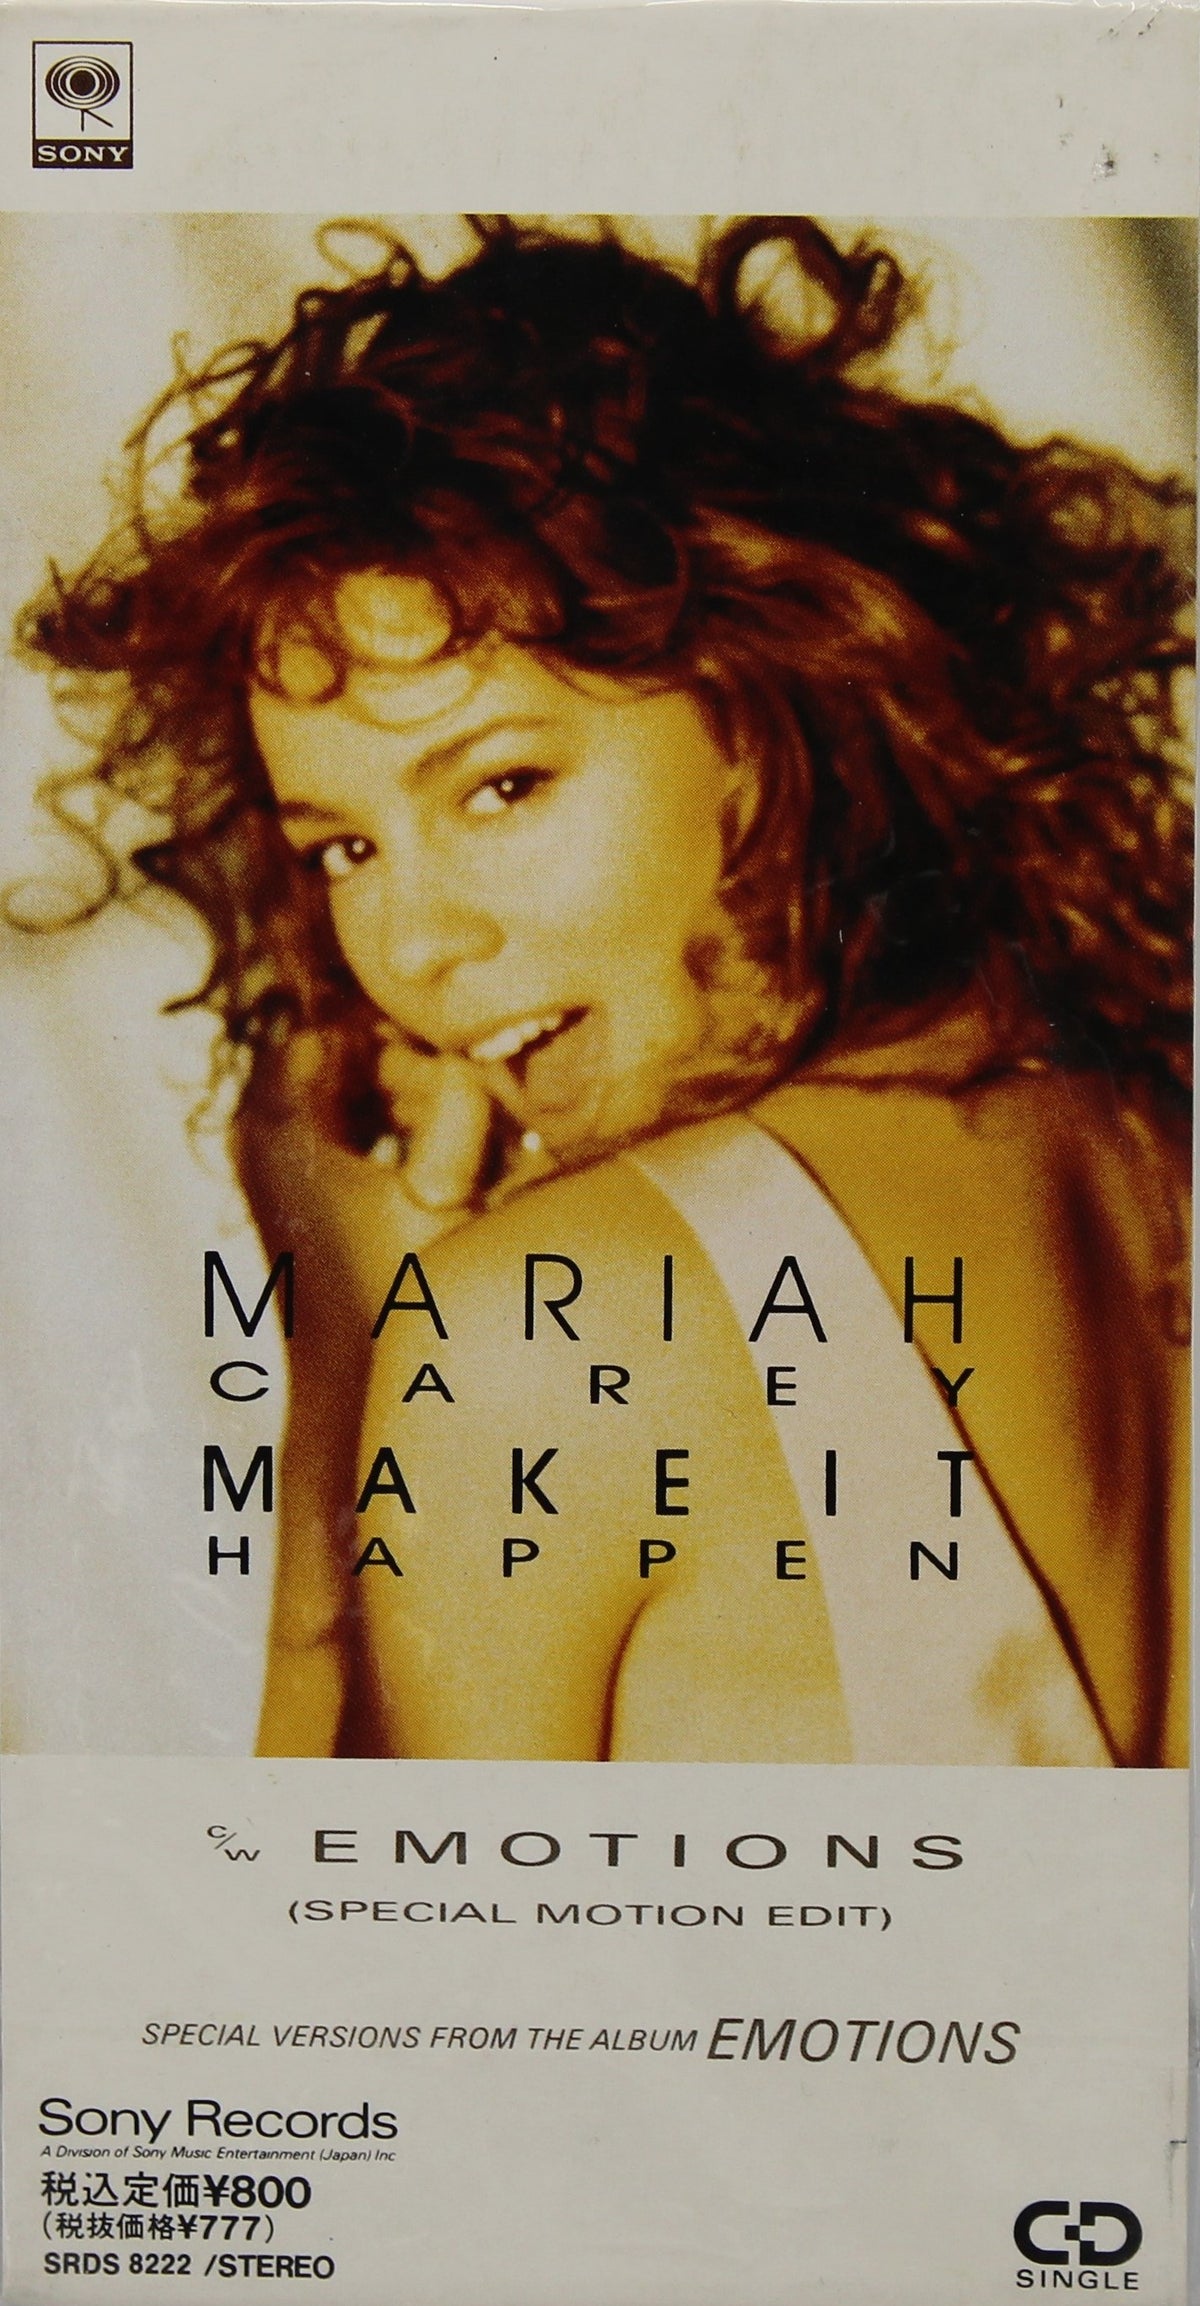 Mariah Carey – Make It Happen, CD, Mini, Single, Japan 1992